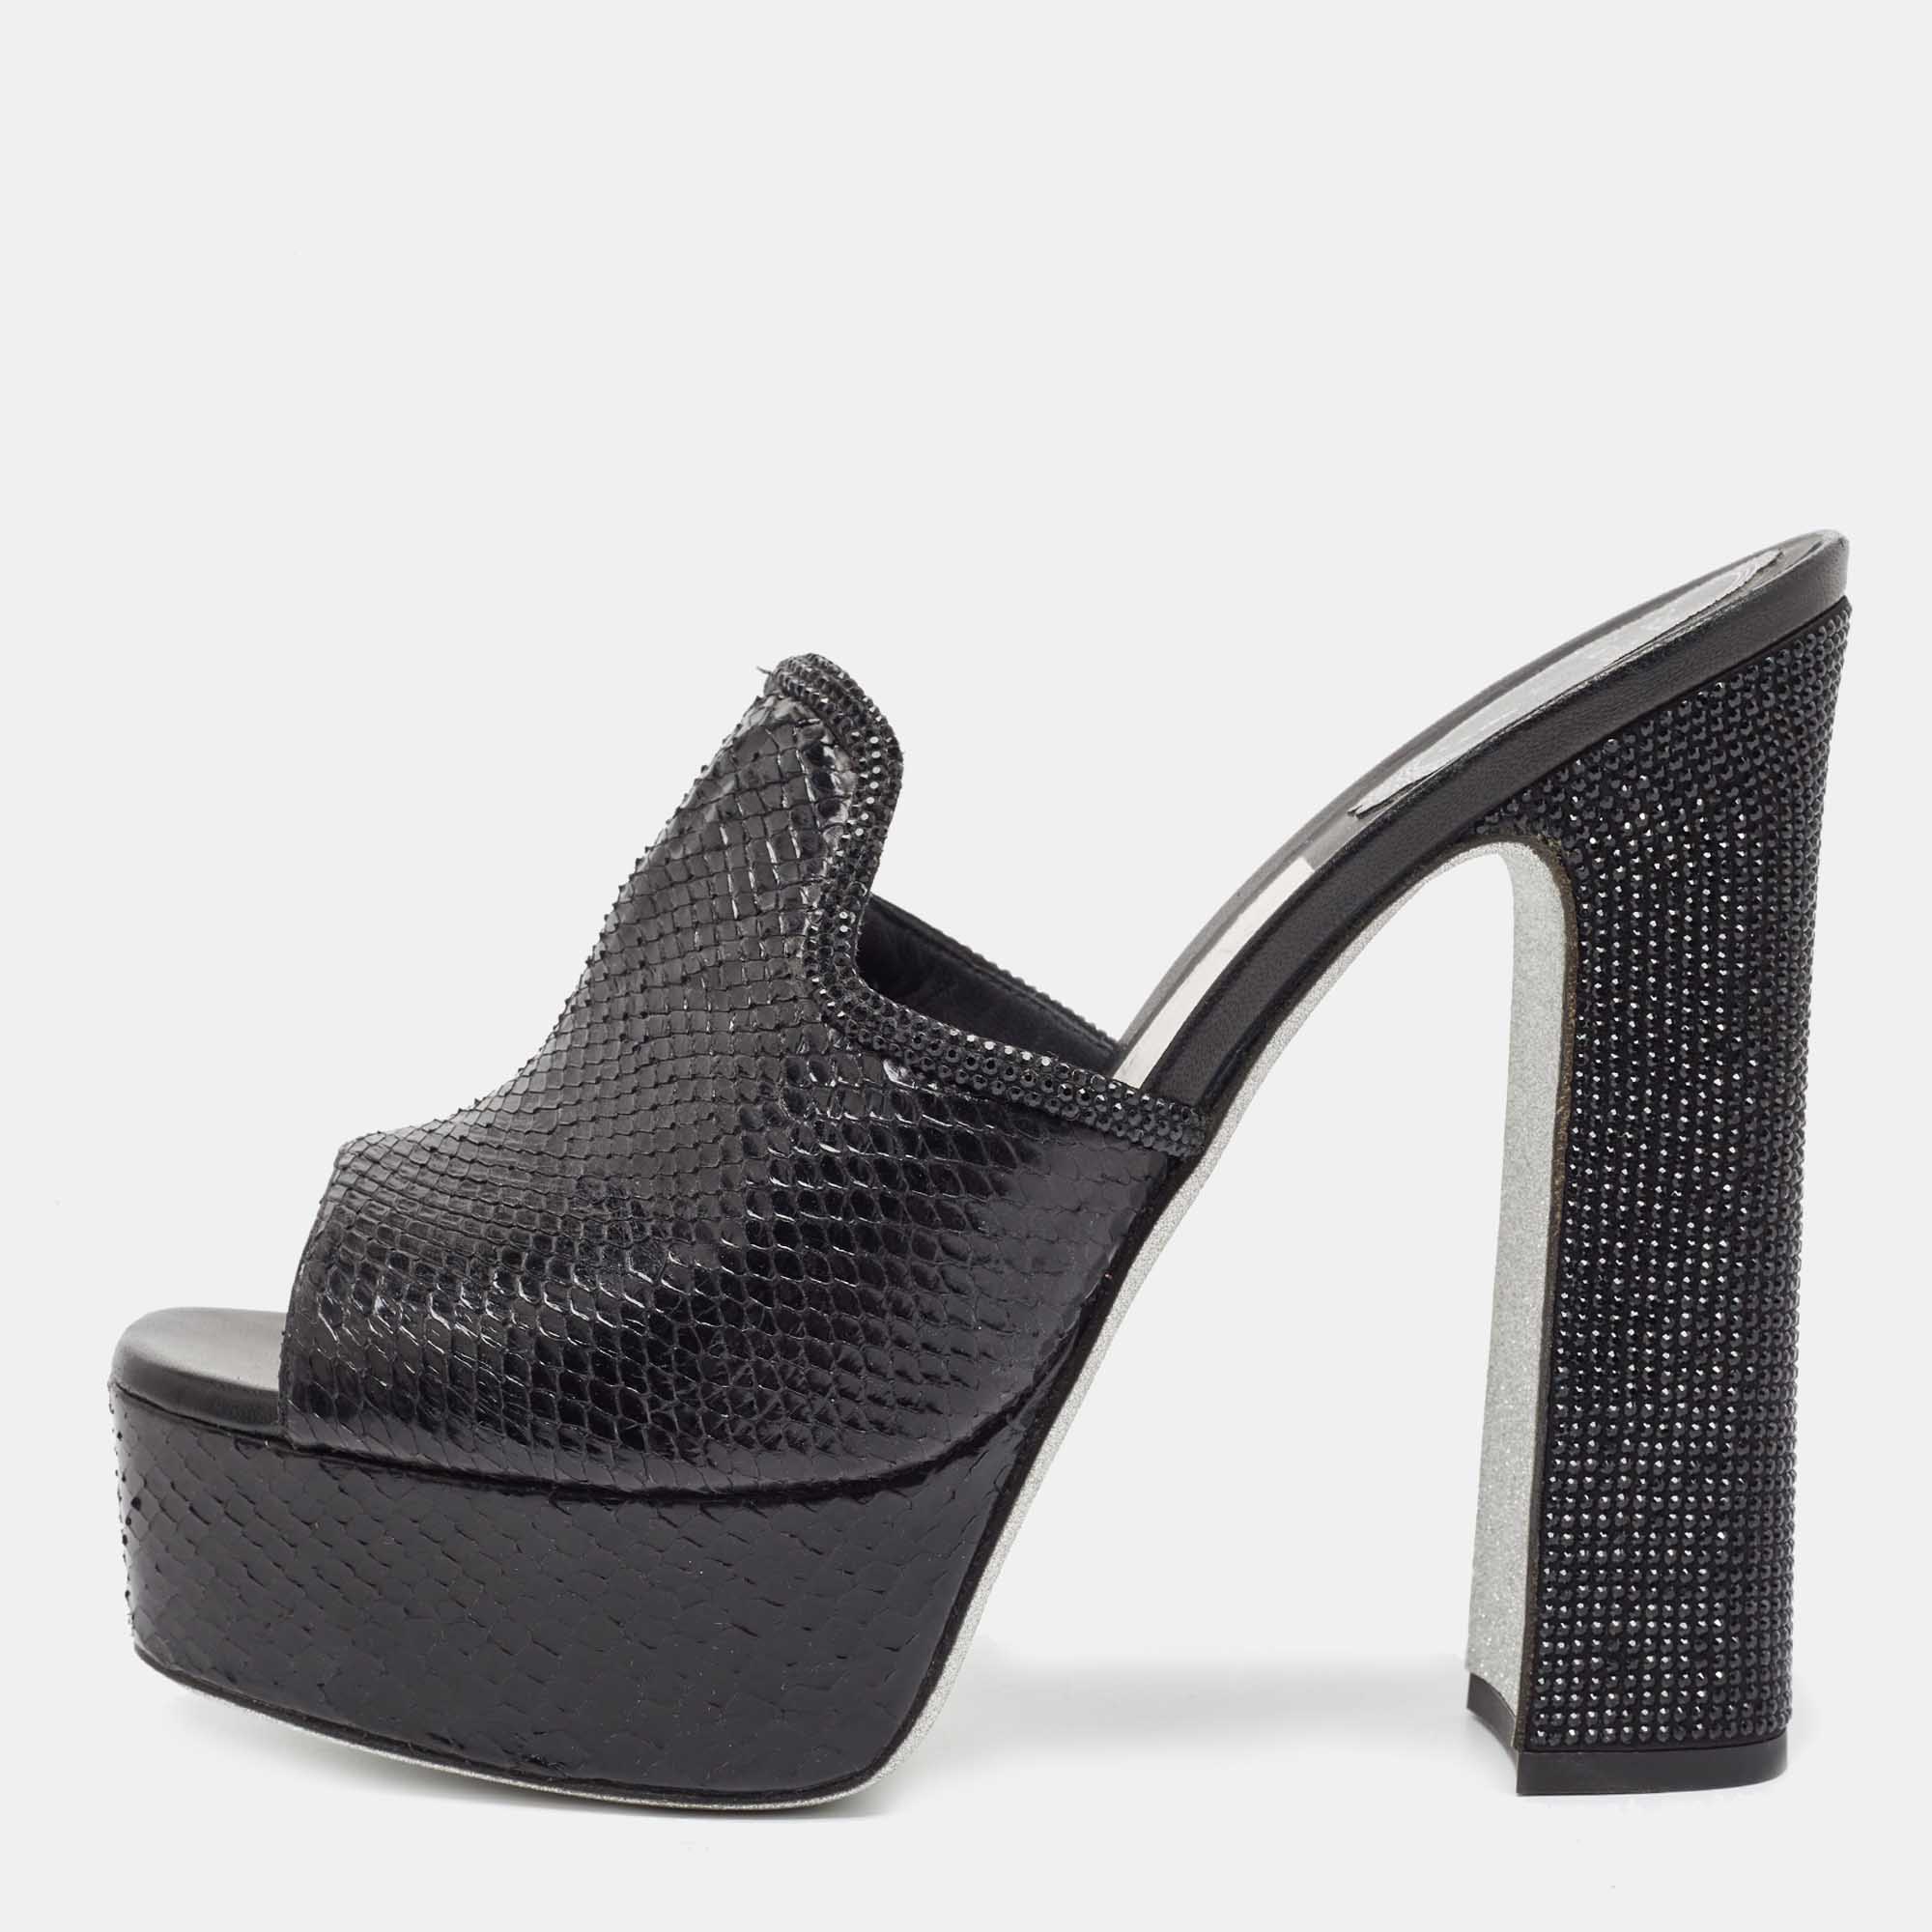 René Caovilla Black Python Slide Sandals Size 41